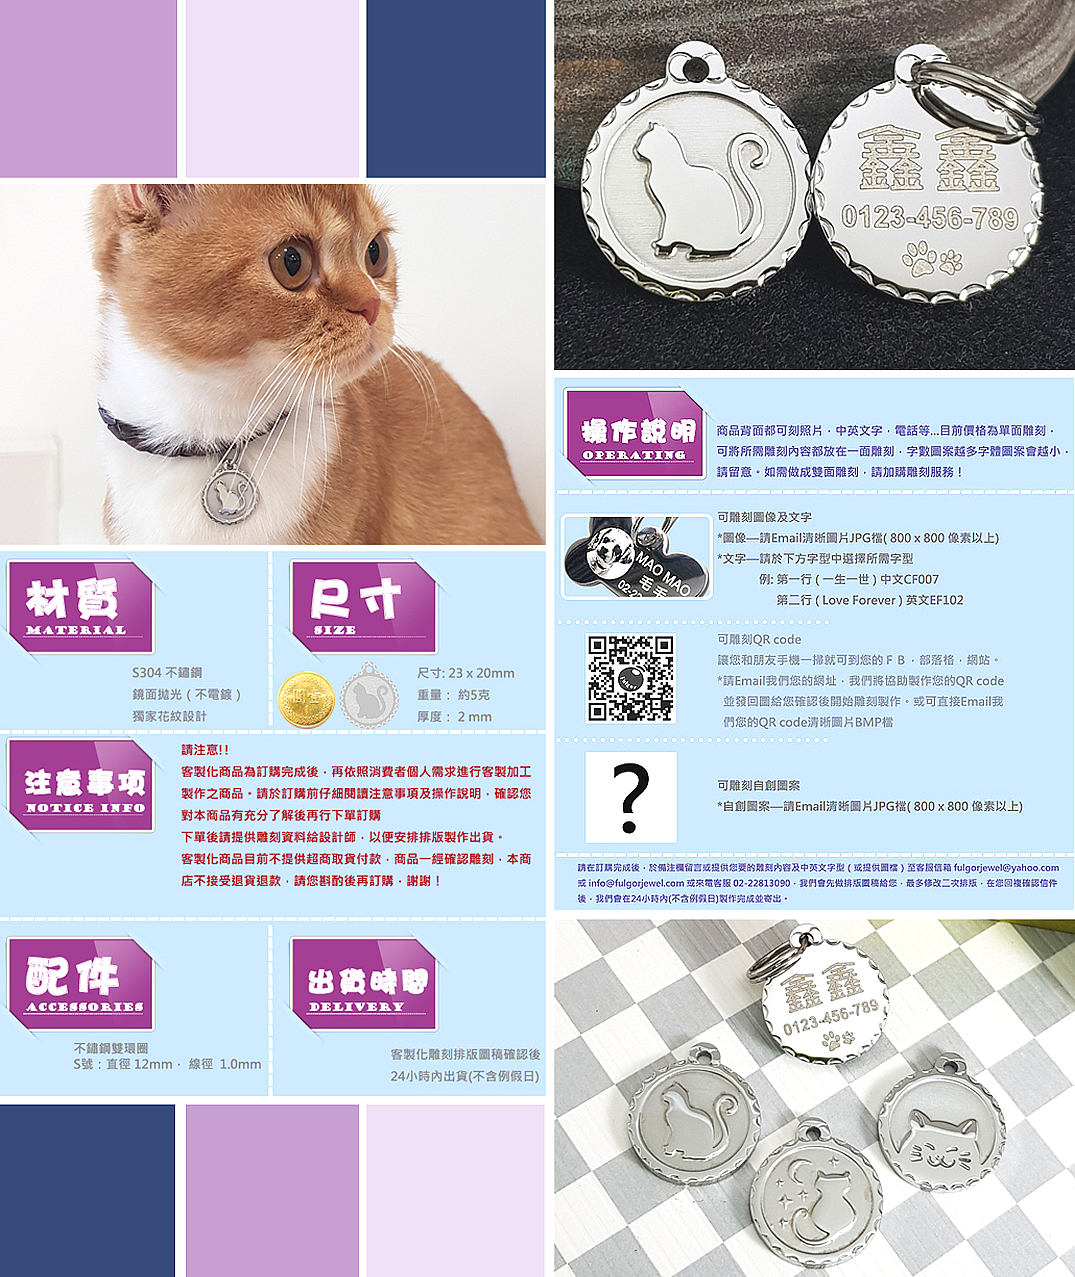 客製貓咪姓名牌吊牌單隻貓貓牌-富狗客製-Steel-Engraving-Single-Cat Design-pet id tag-FulgorJewel-Cat-Tag-info.jpg